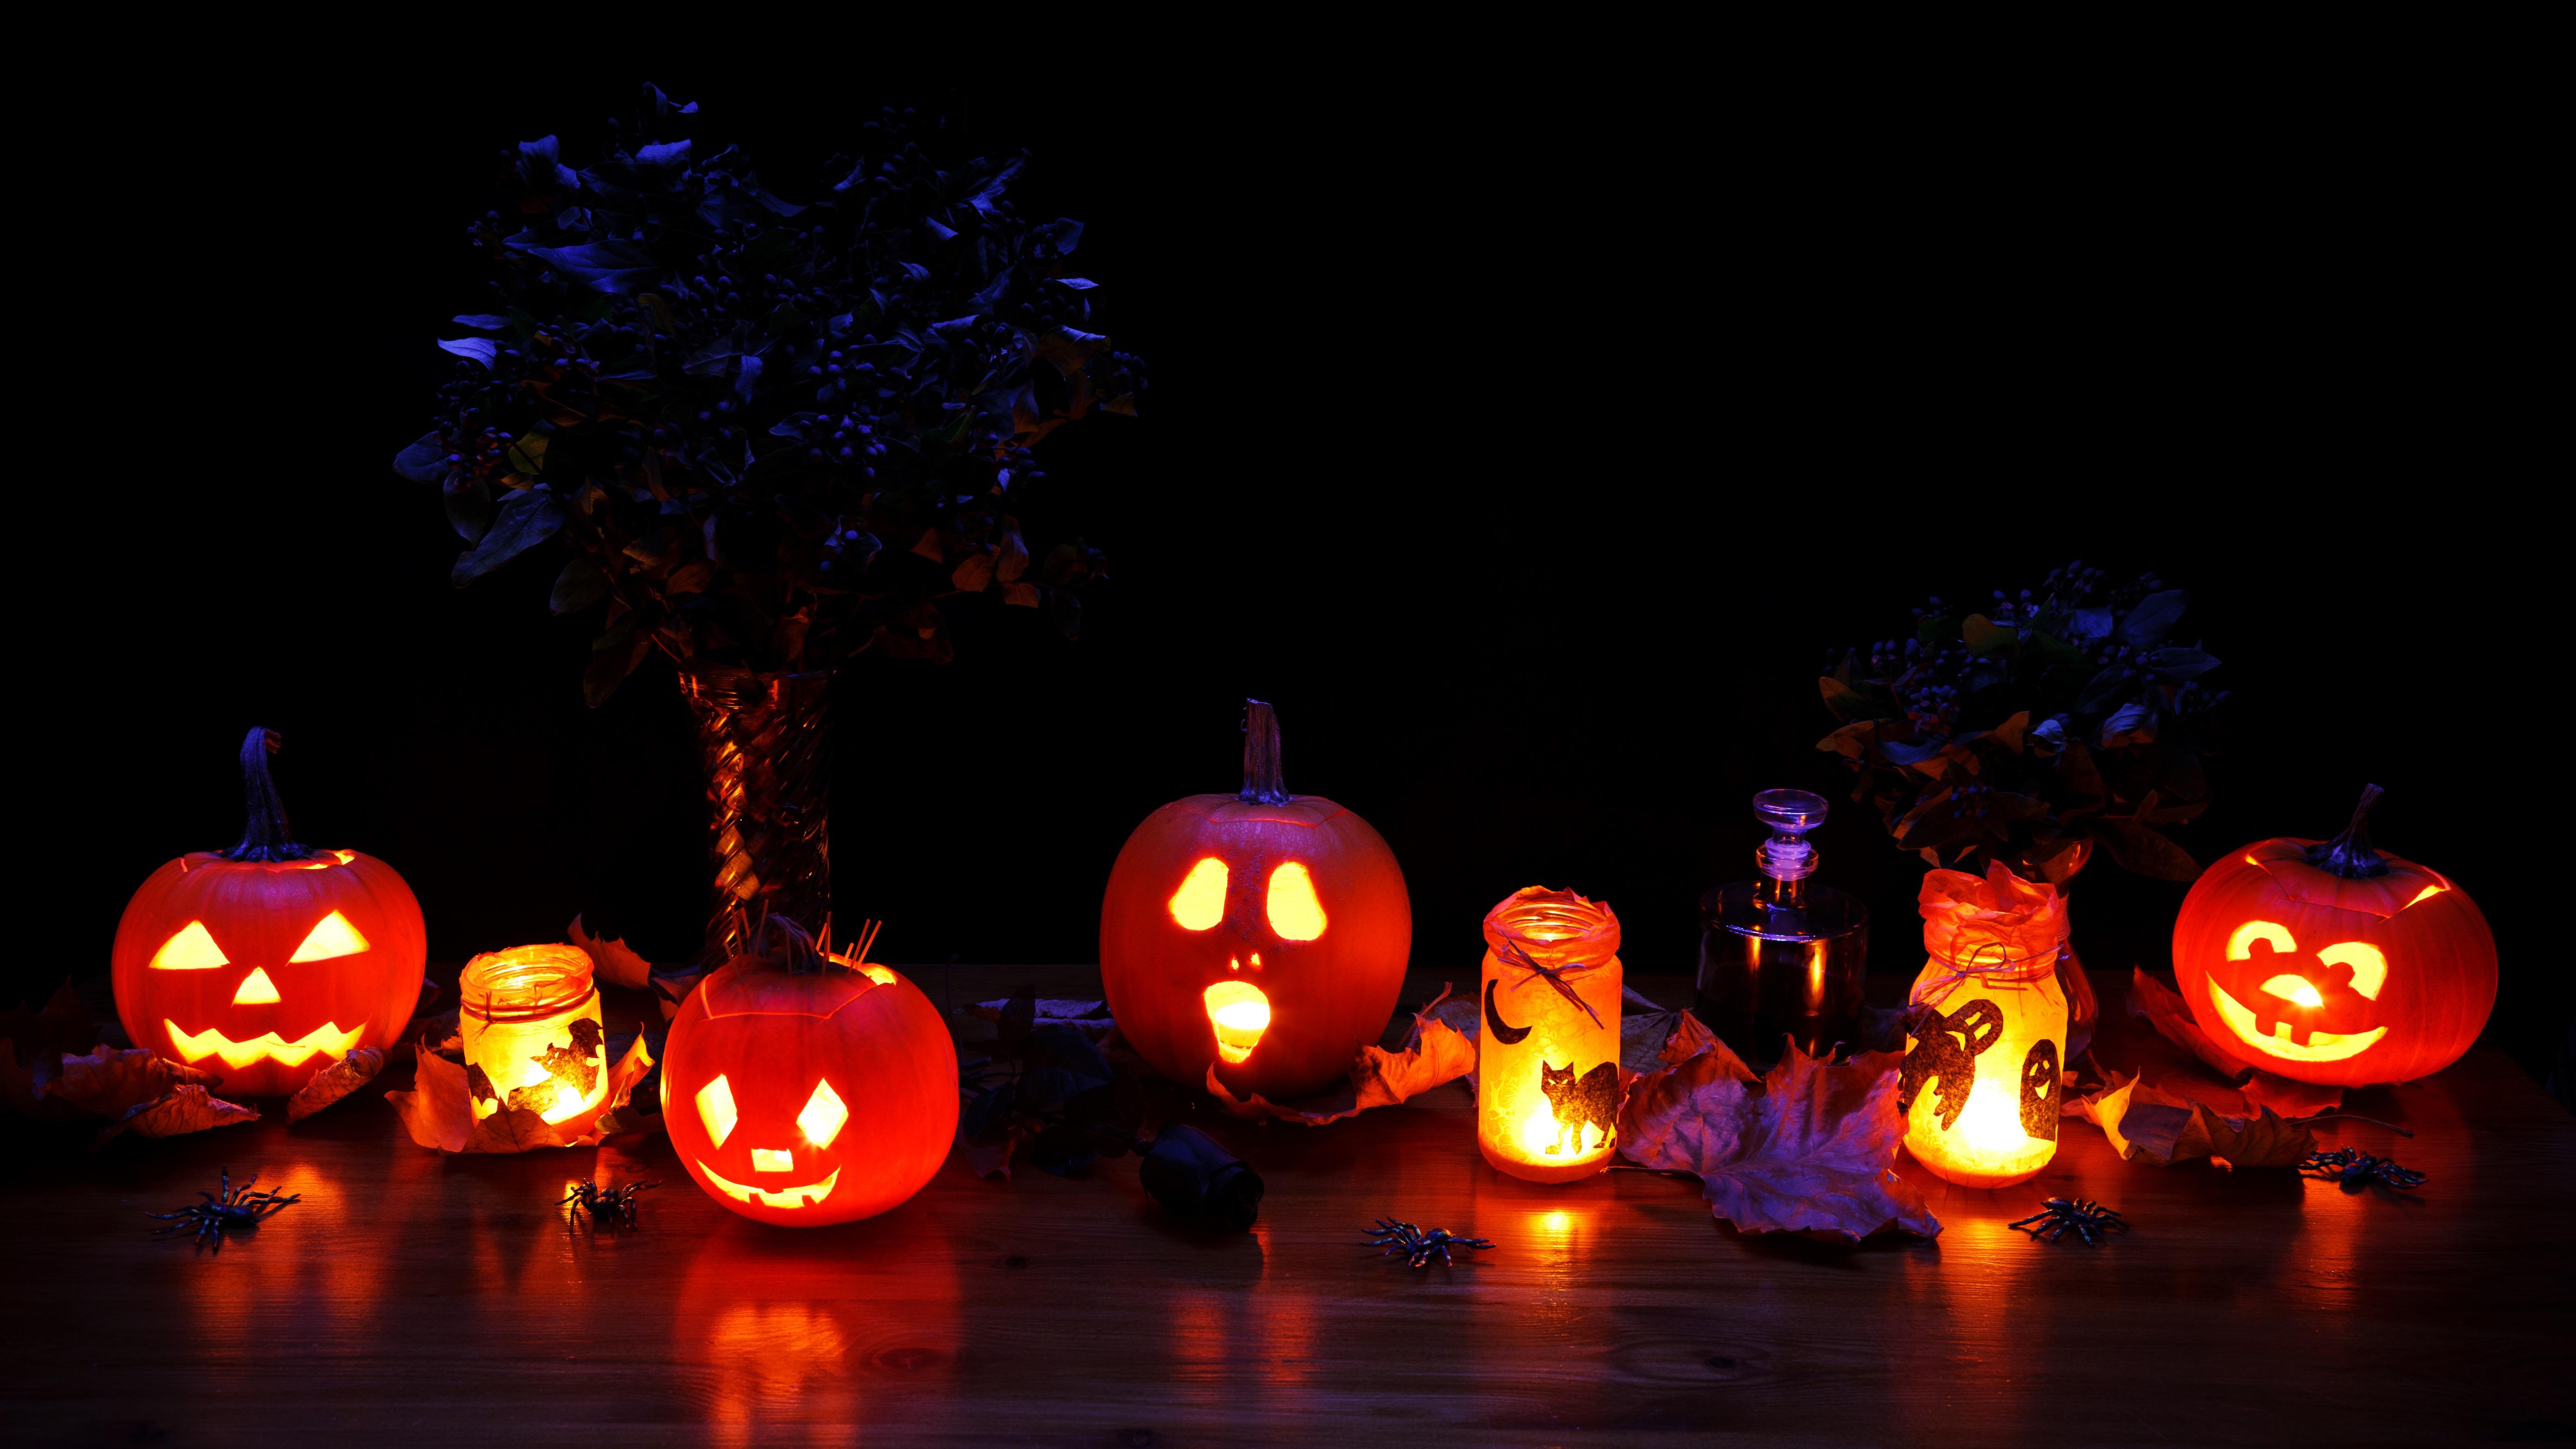 Halloween Decorations by PublicDomainPictures